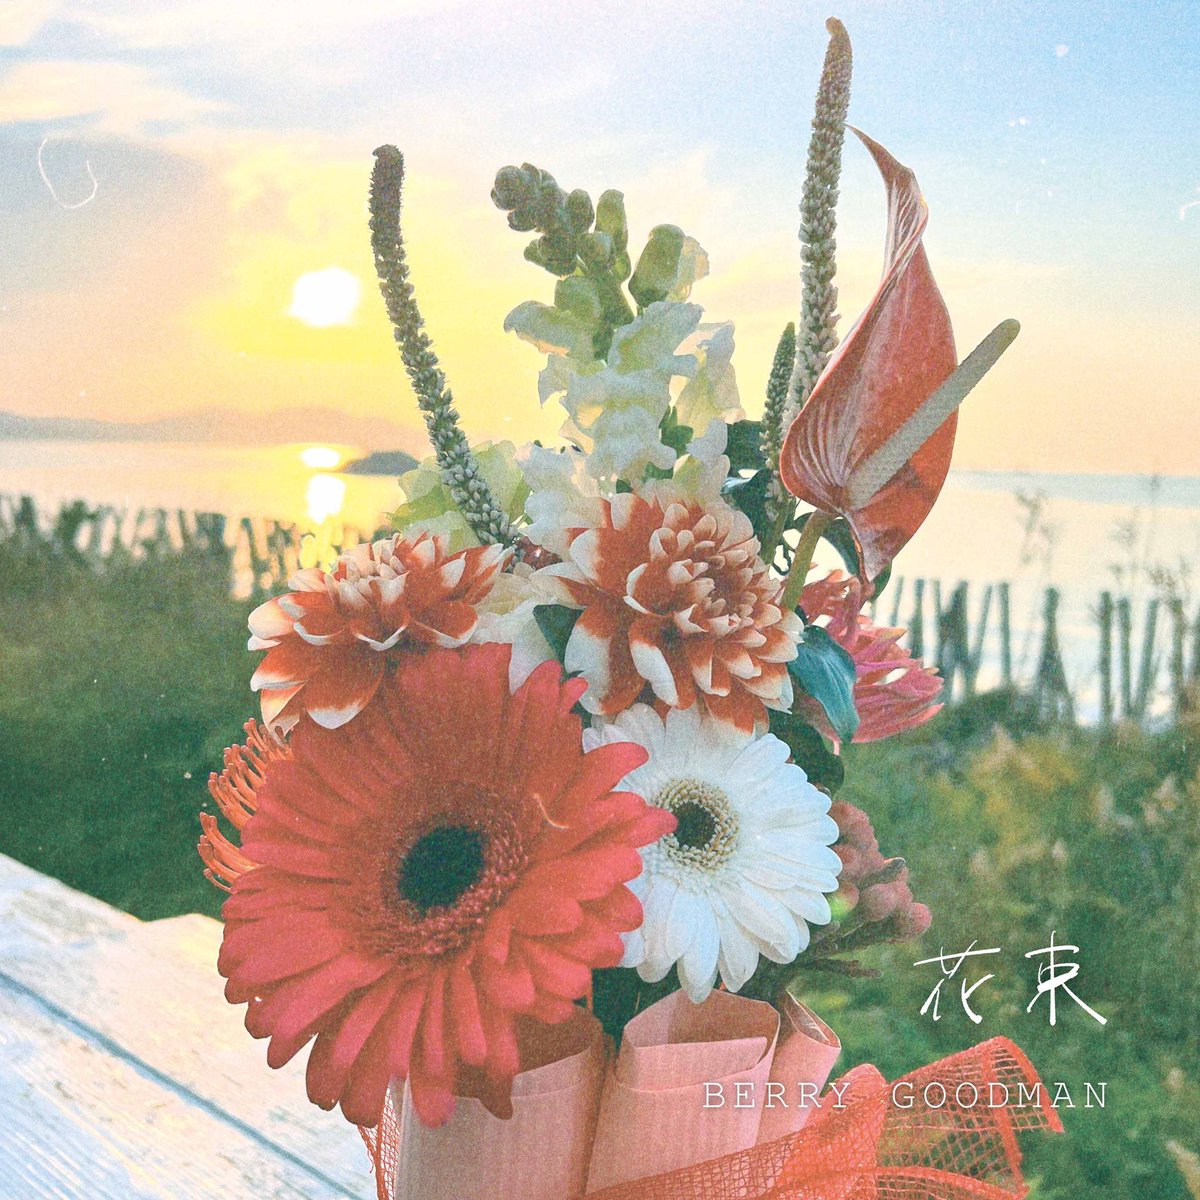 【 🆕MV 】明日1月16日(日)にリリースされる新曲「花束」のMVが今夜22:00に公開💐！TikTokで大注目されてる新曲😳みんなで一緒に見ましょう🥳💐📺 ━━━🎧2022.1.16 Release「花束」 